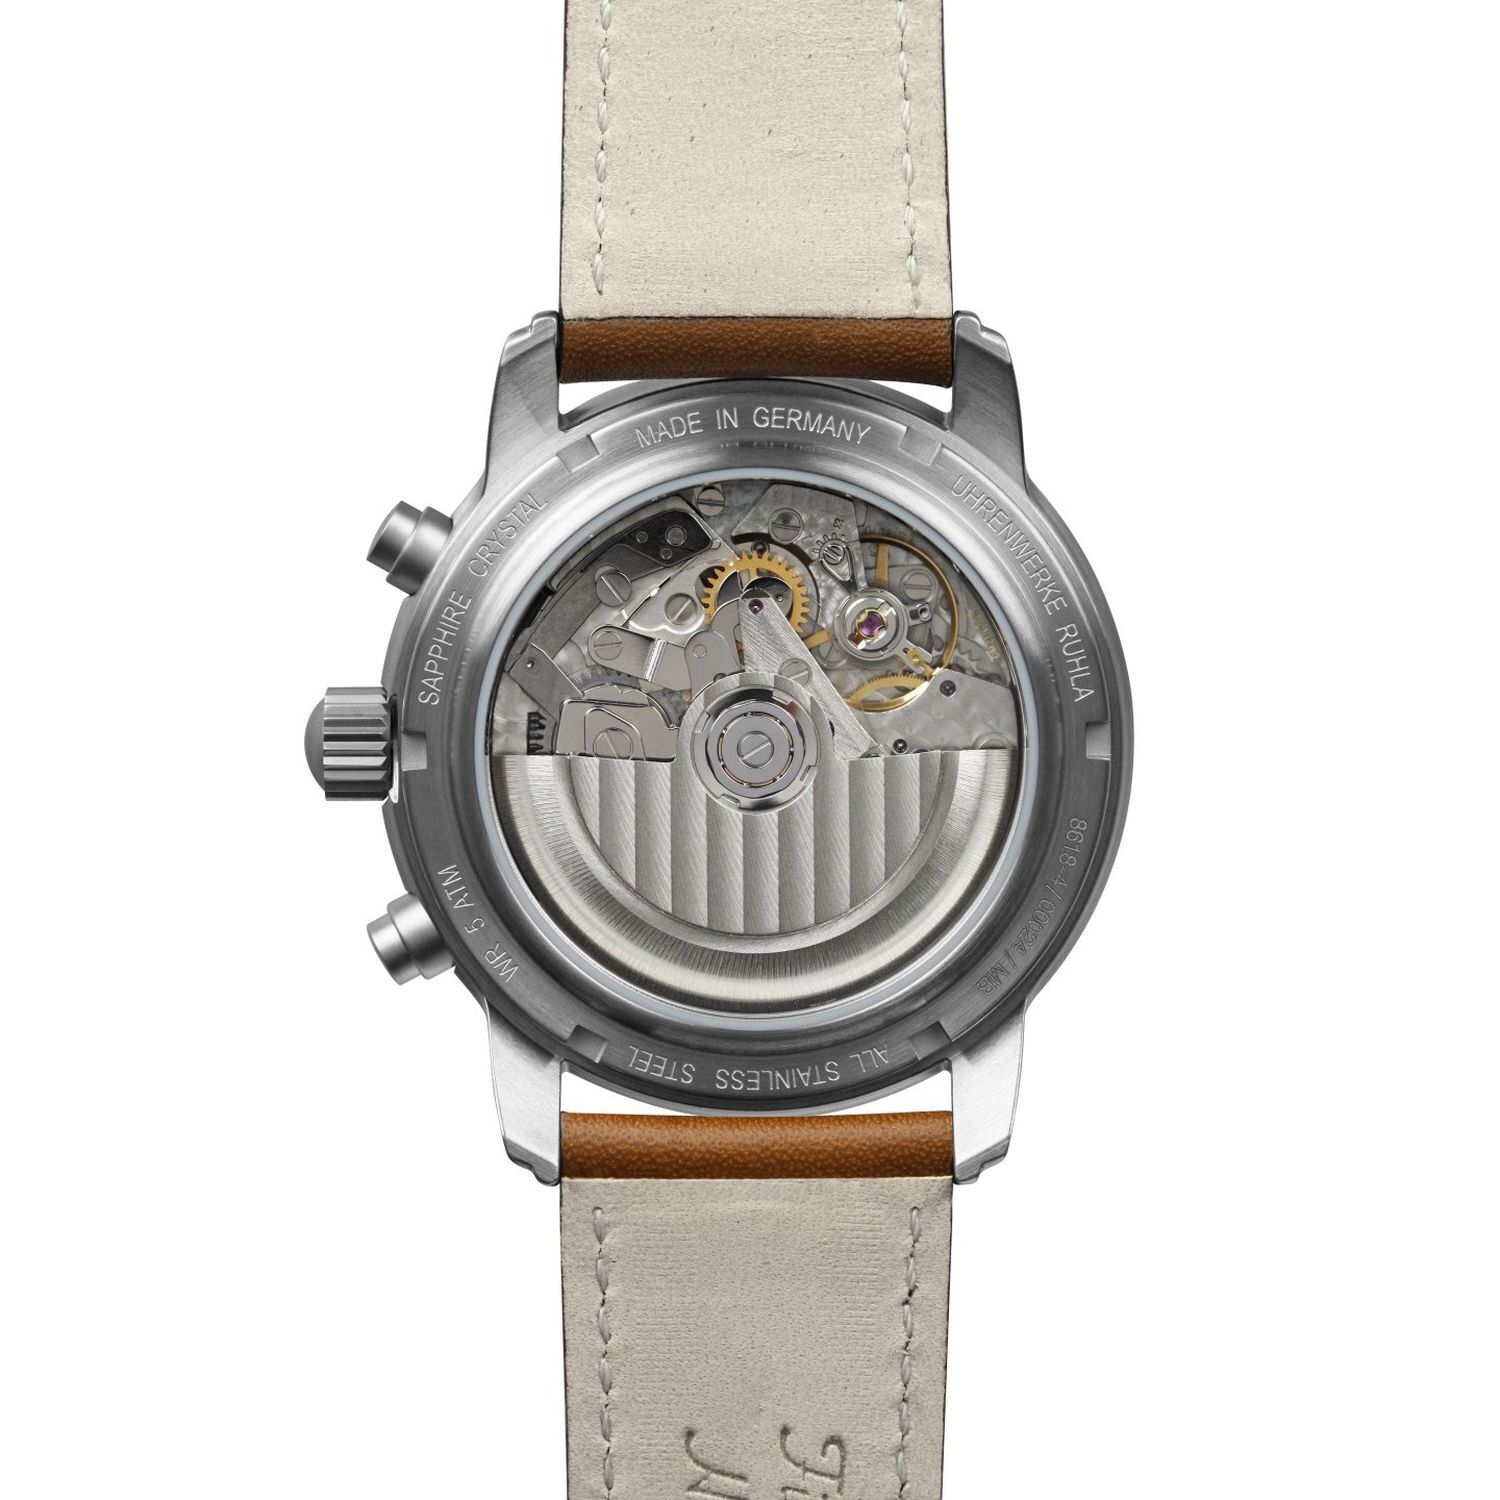 Zeppelin 86184 Men's 100 Jahre Green Automatic Watch